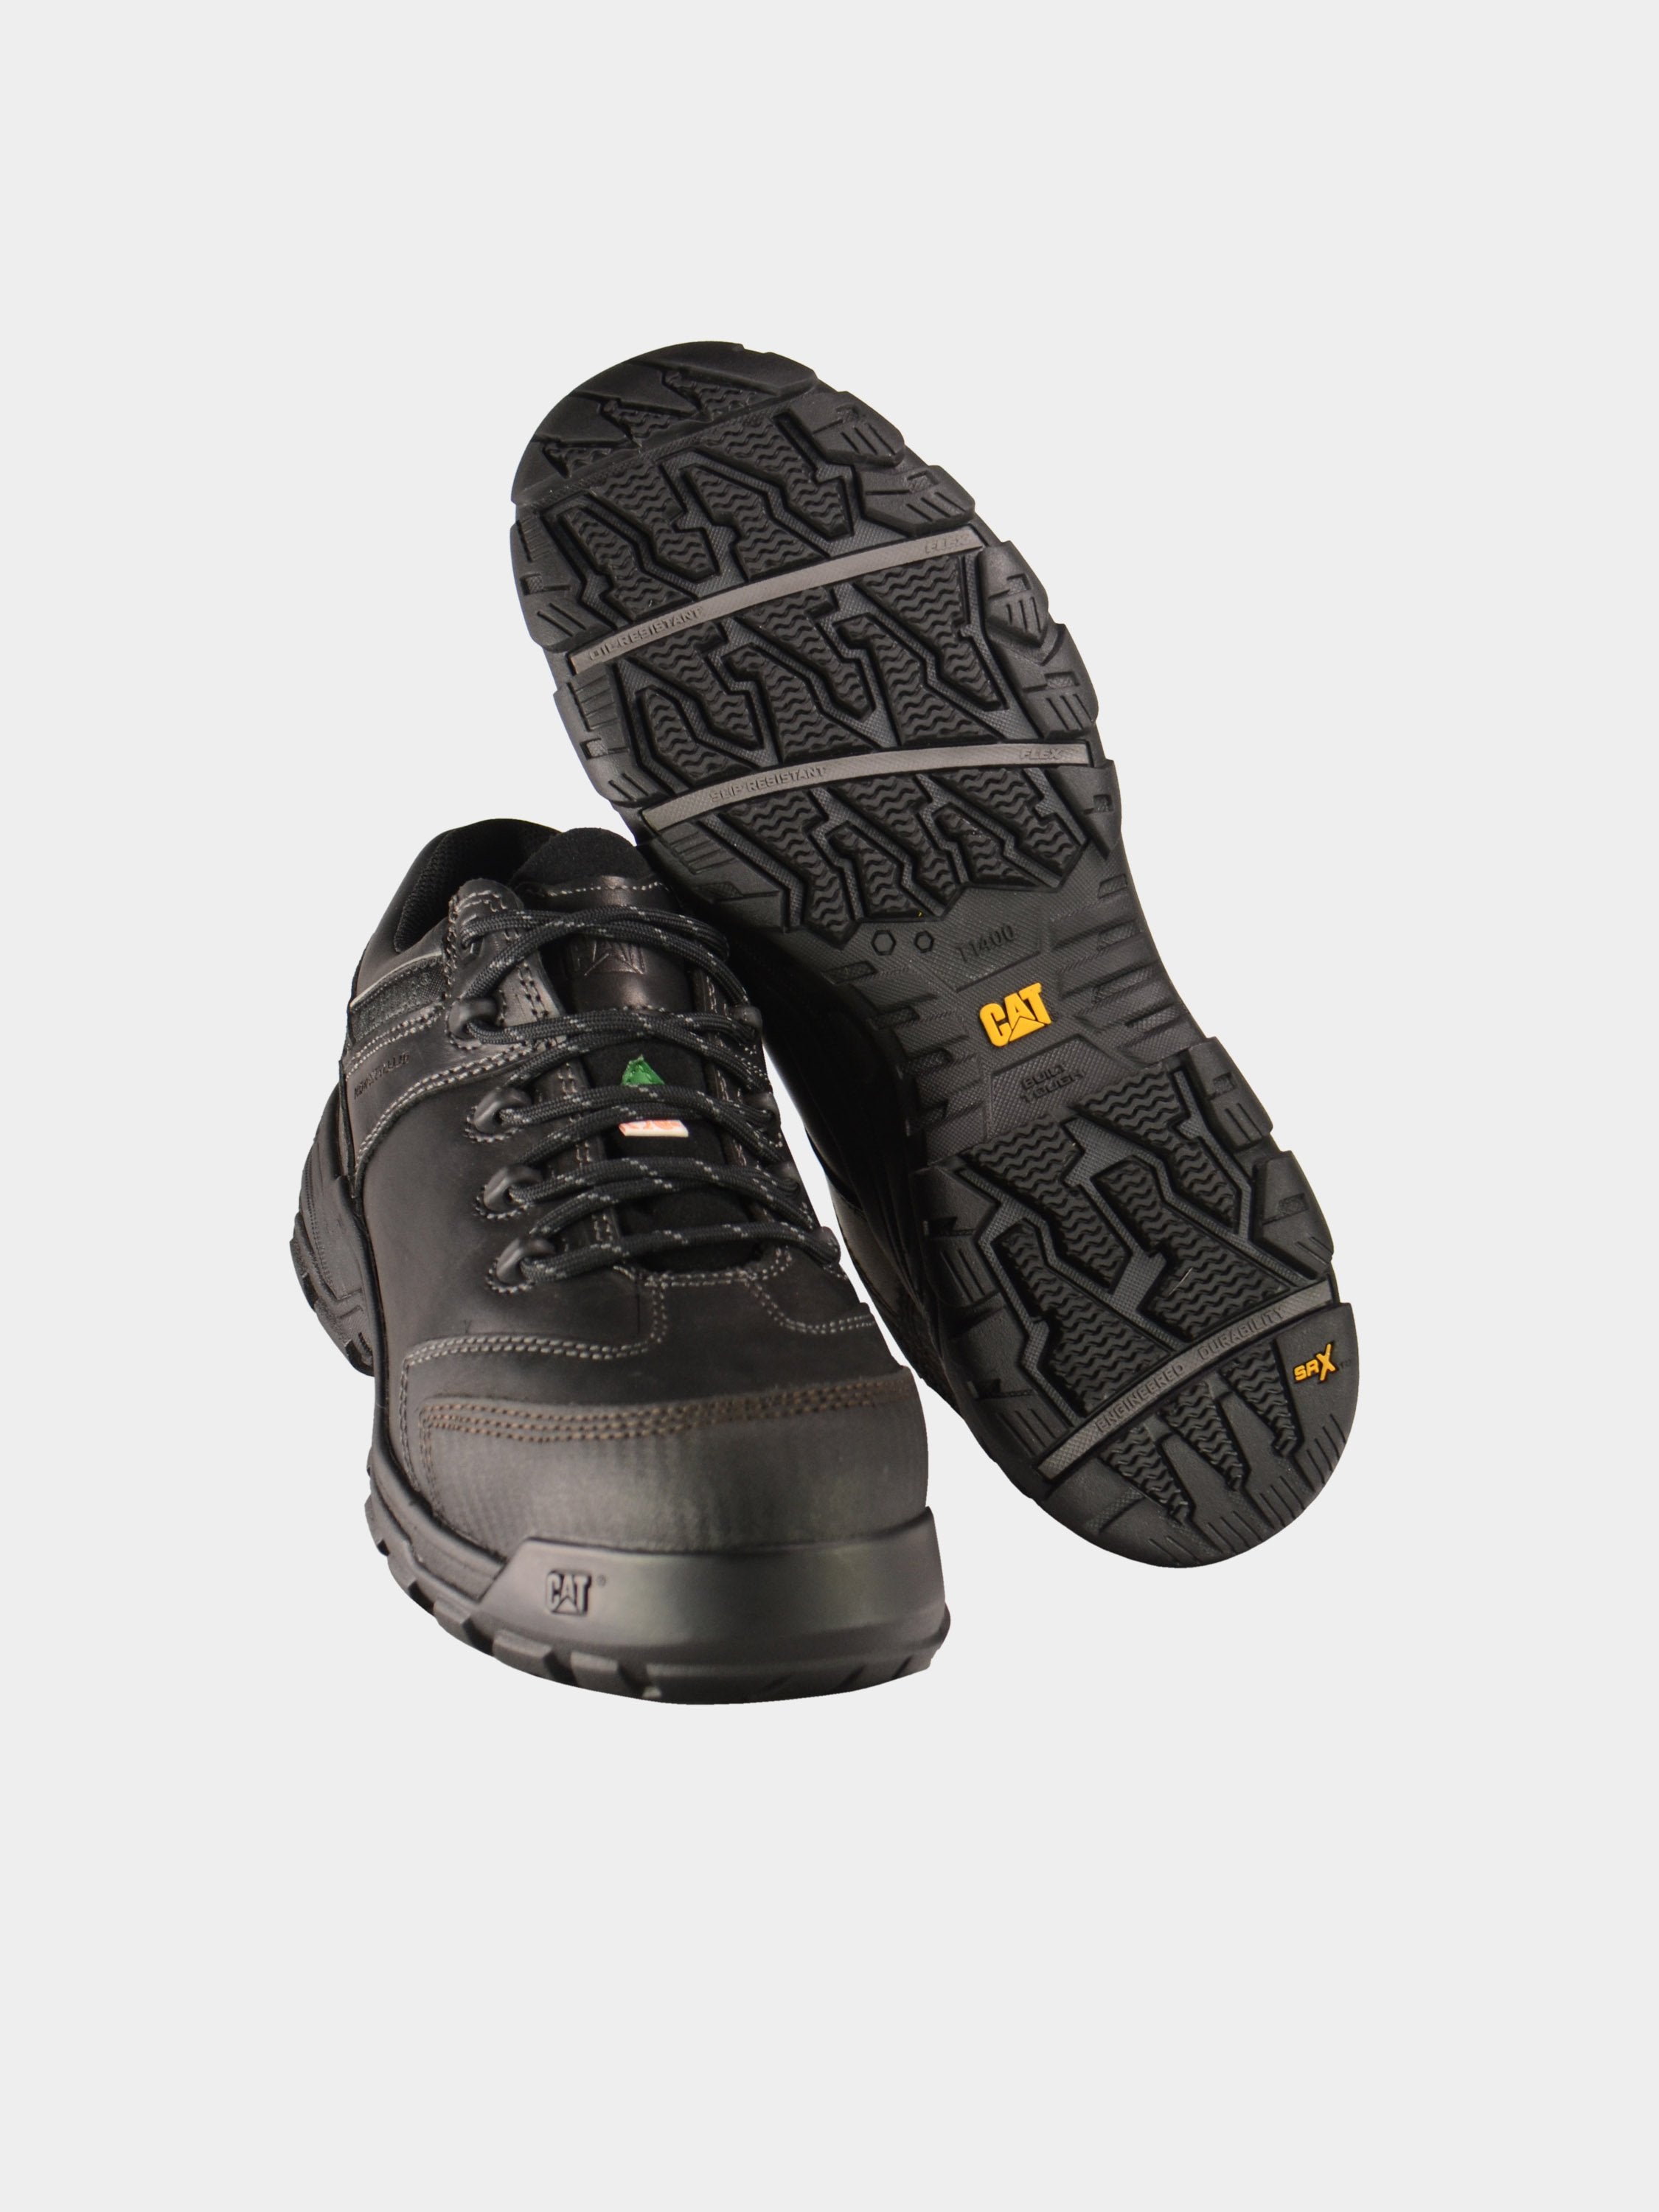 Caterpillar Tungsten Men's Composite Toe Work Safety Shoes #color_Black